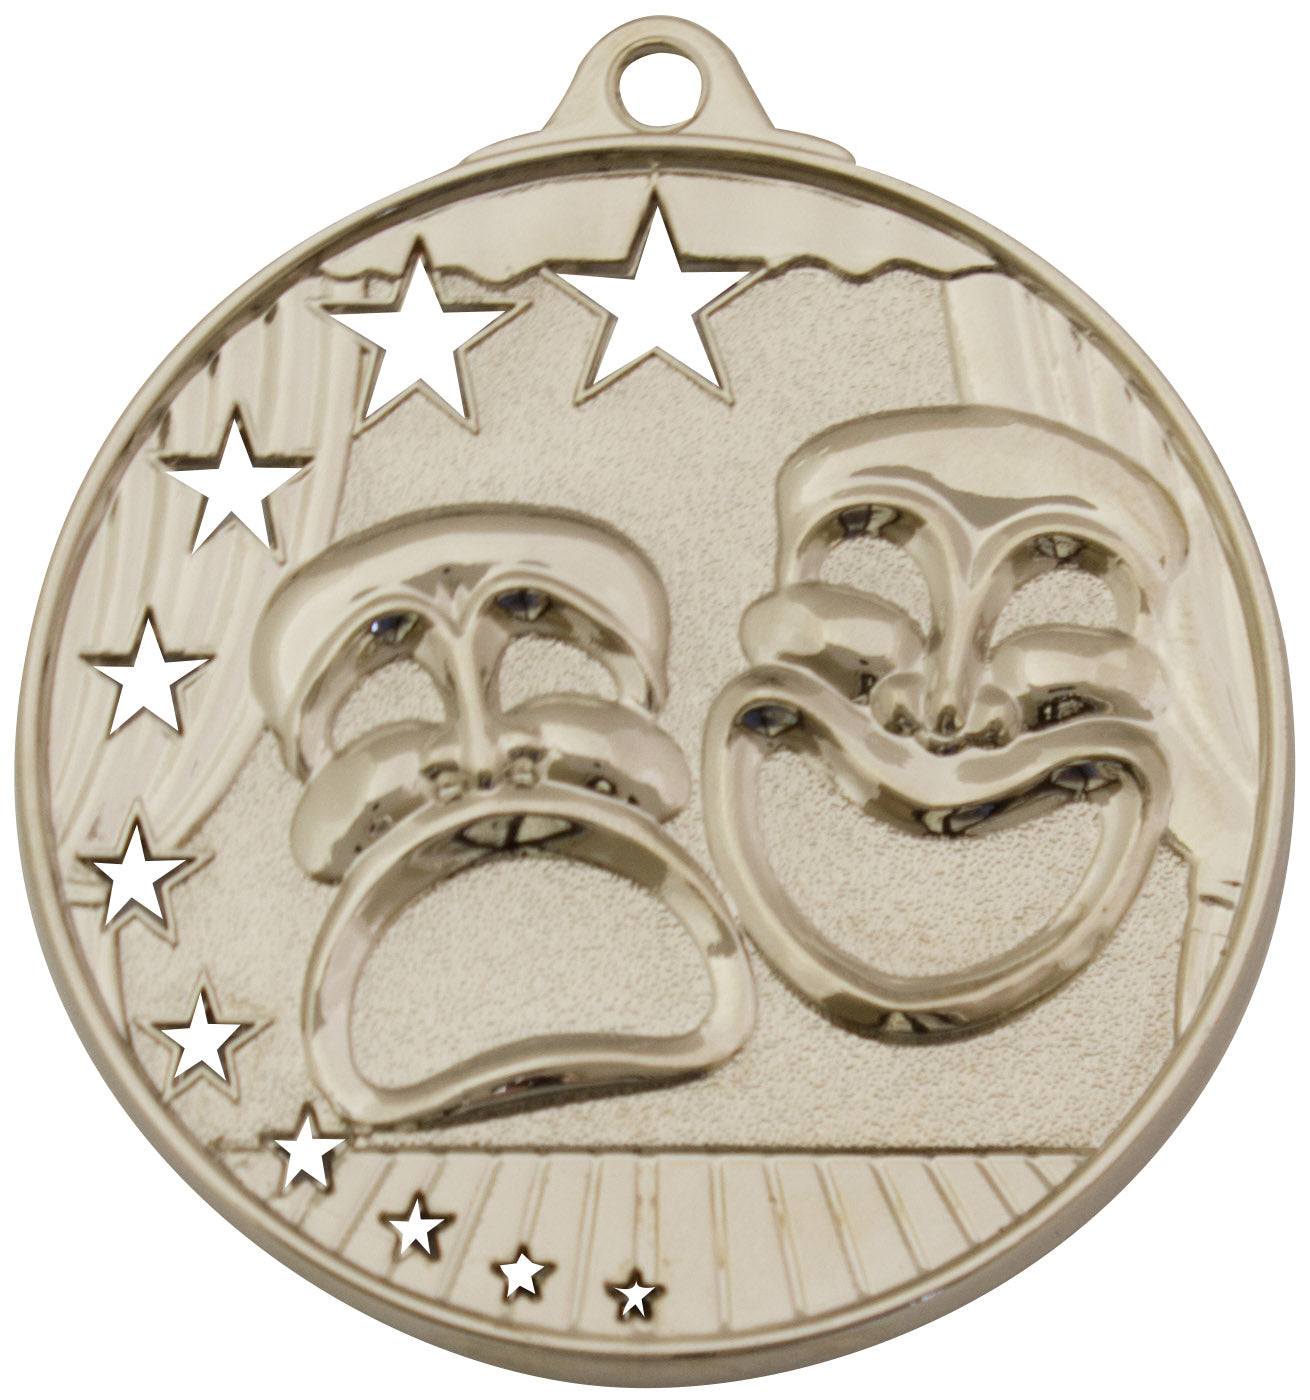 MH994 Drama Medal